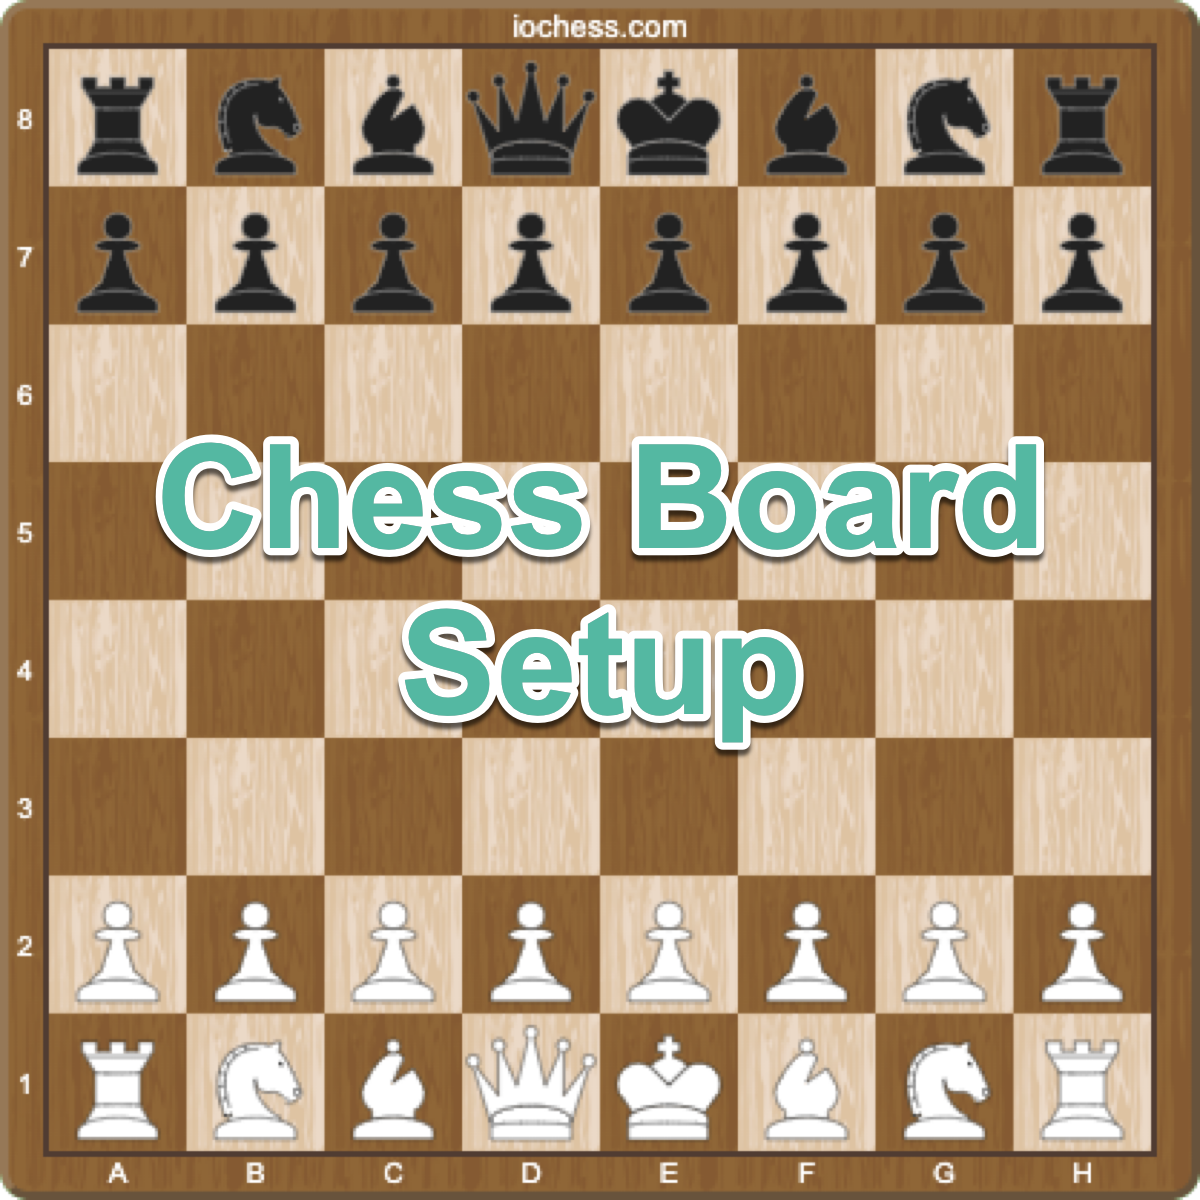 Chess board setup picture